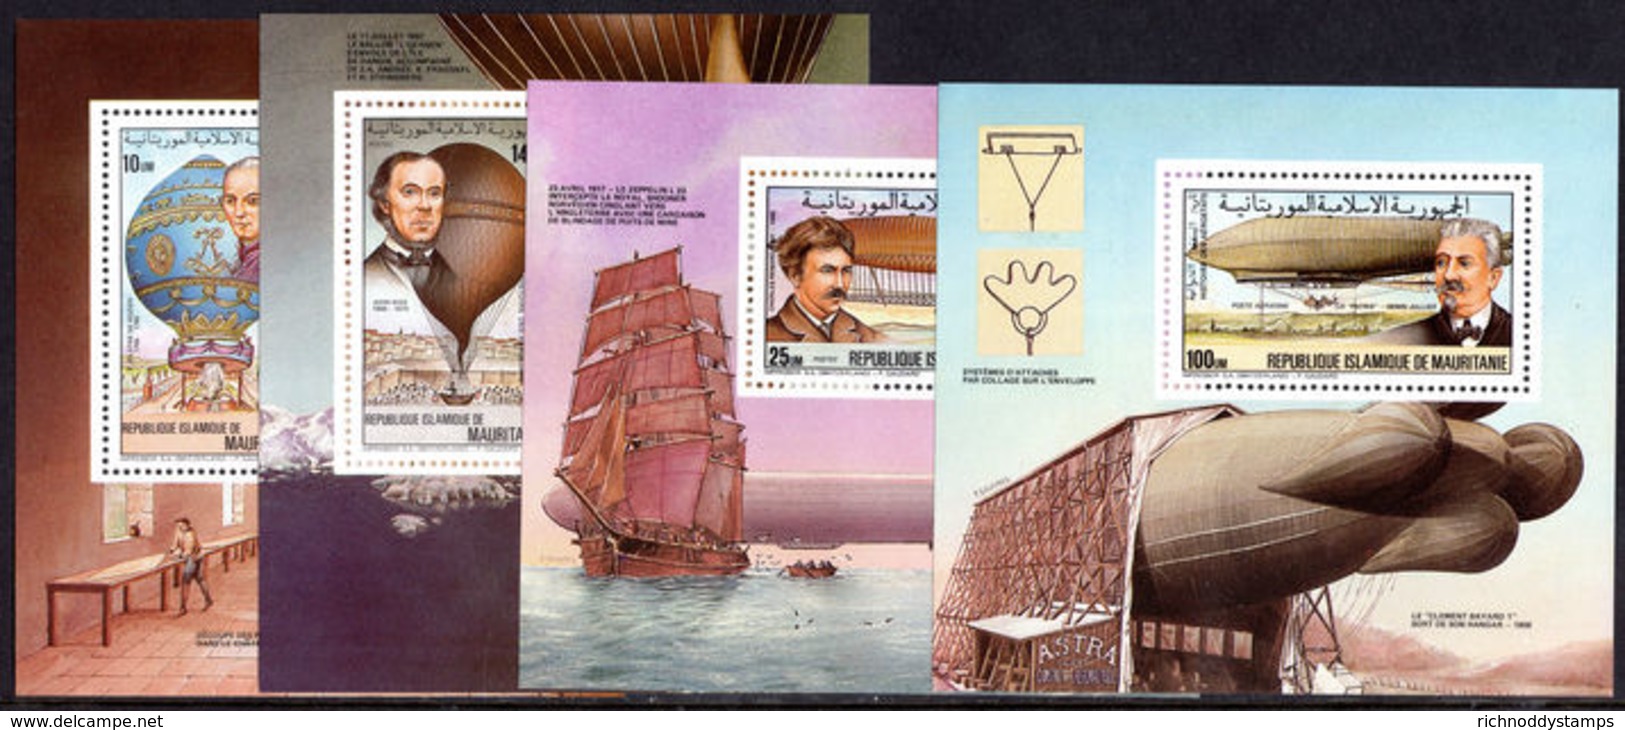 Mauritania 1983 Centenary Of Manned Flight Souvenir Sheet Set Unmounted Mint. - Mauritanie (1960-...)